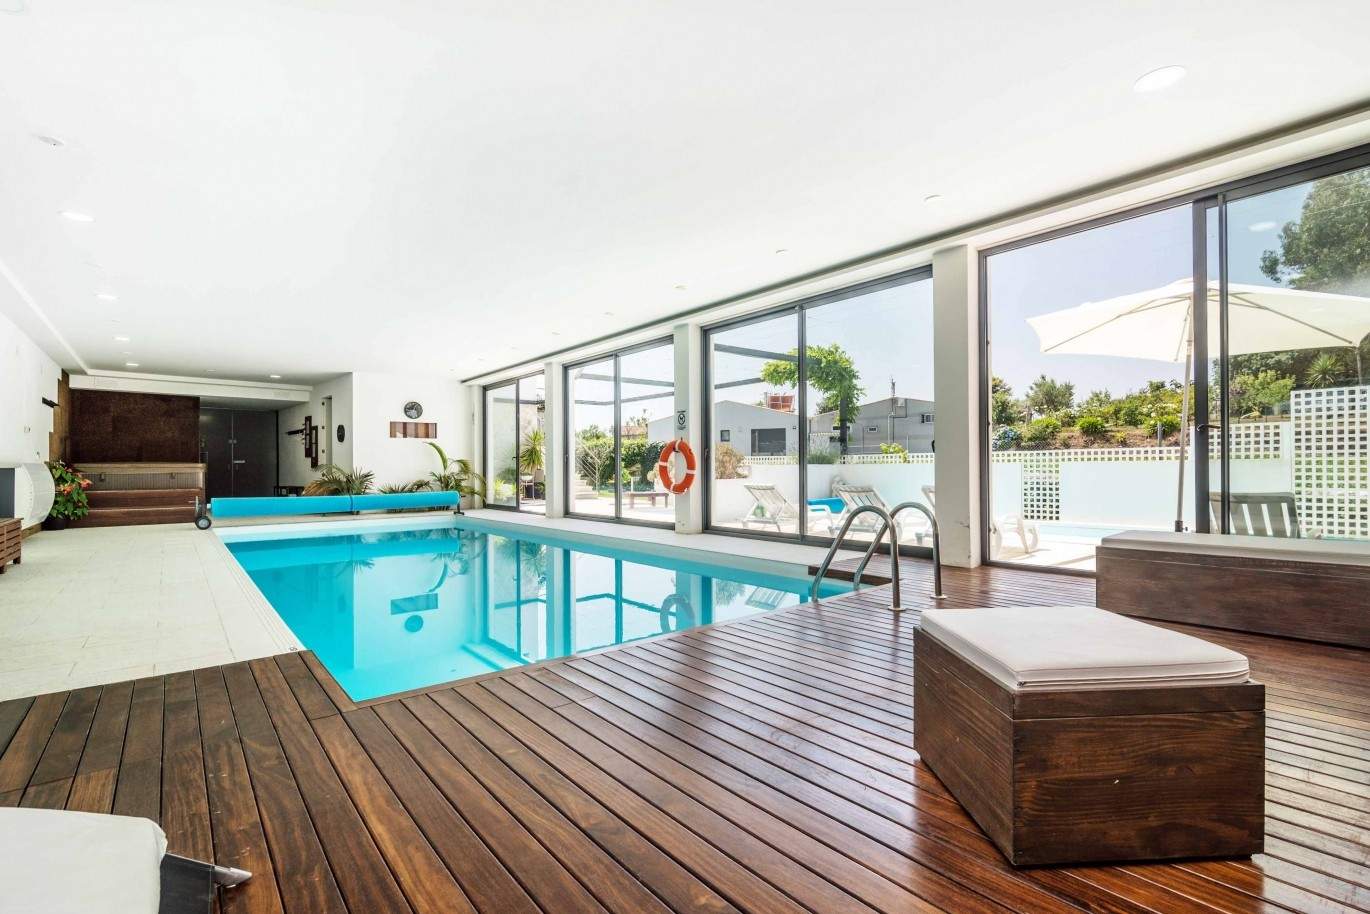 Villa, à vendre, avec piscine et jardin, Vila Conde, Porto, Portugal_62008